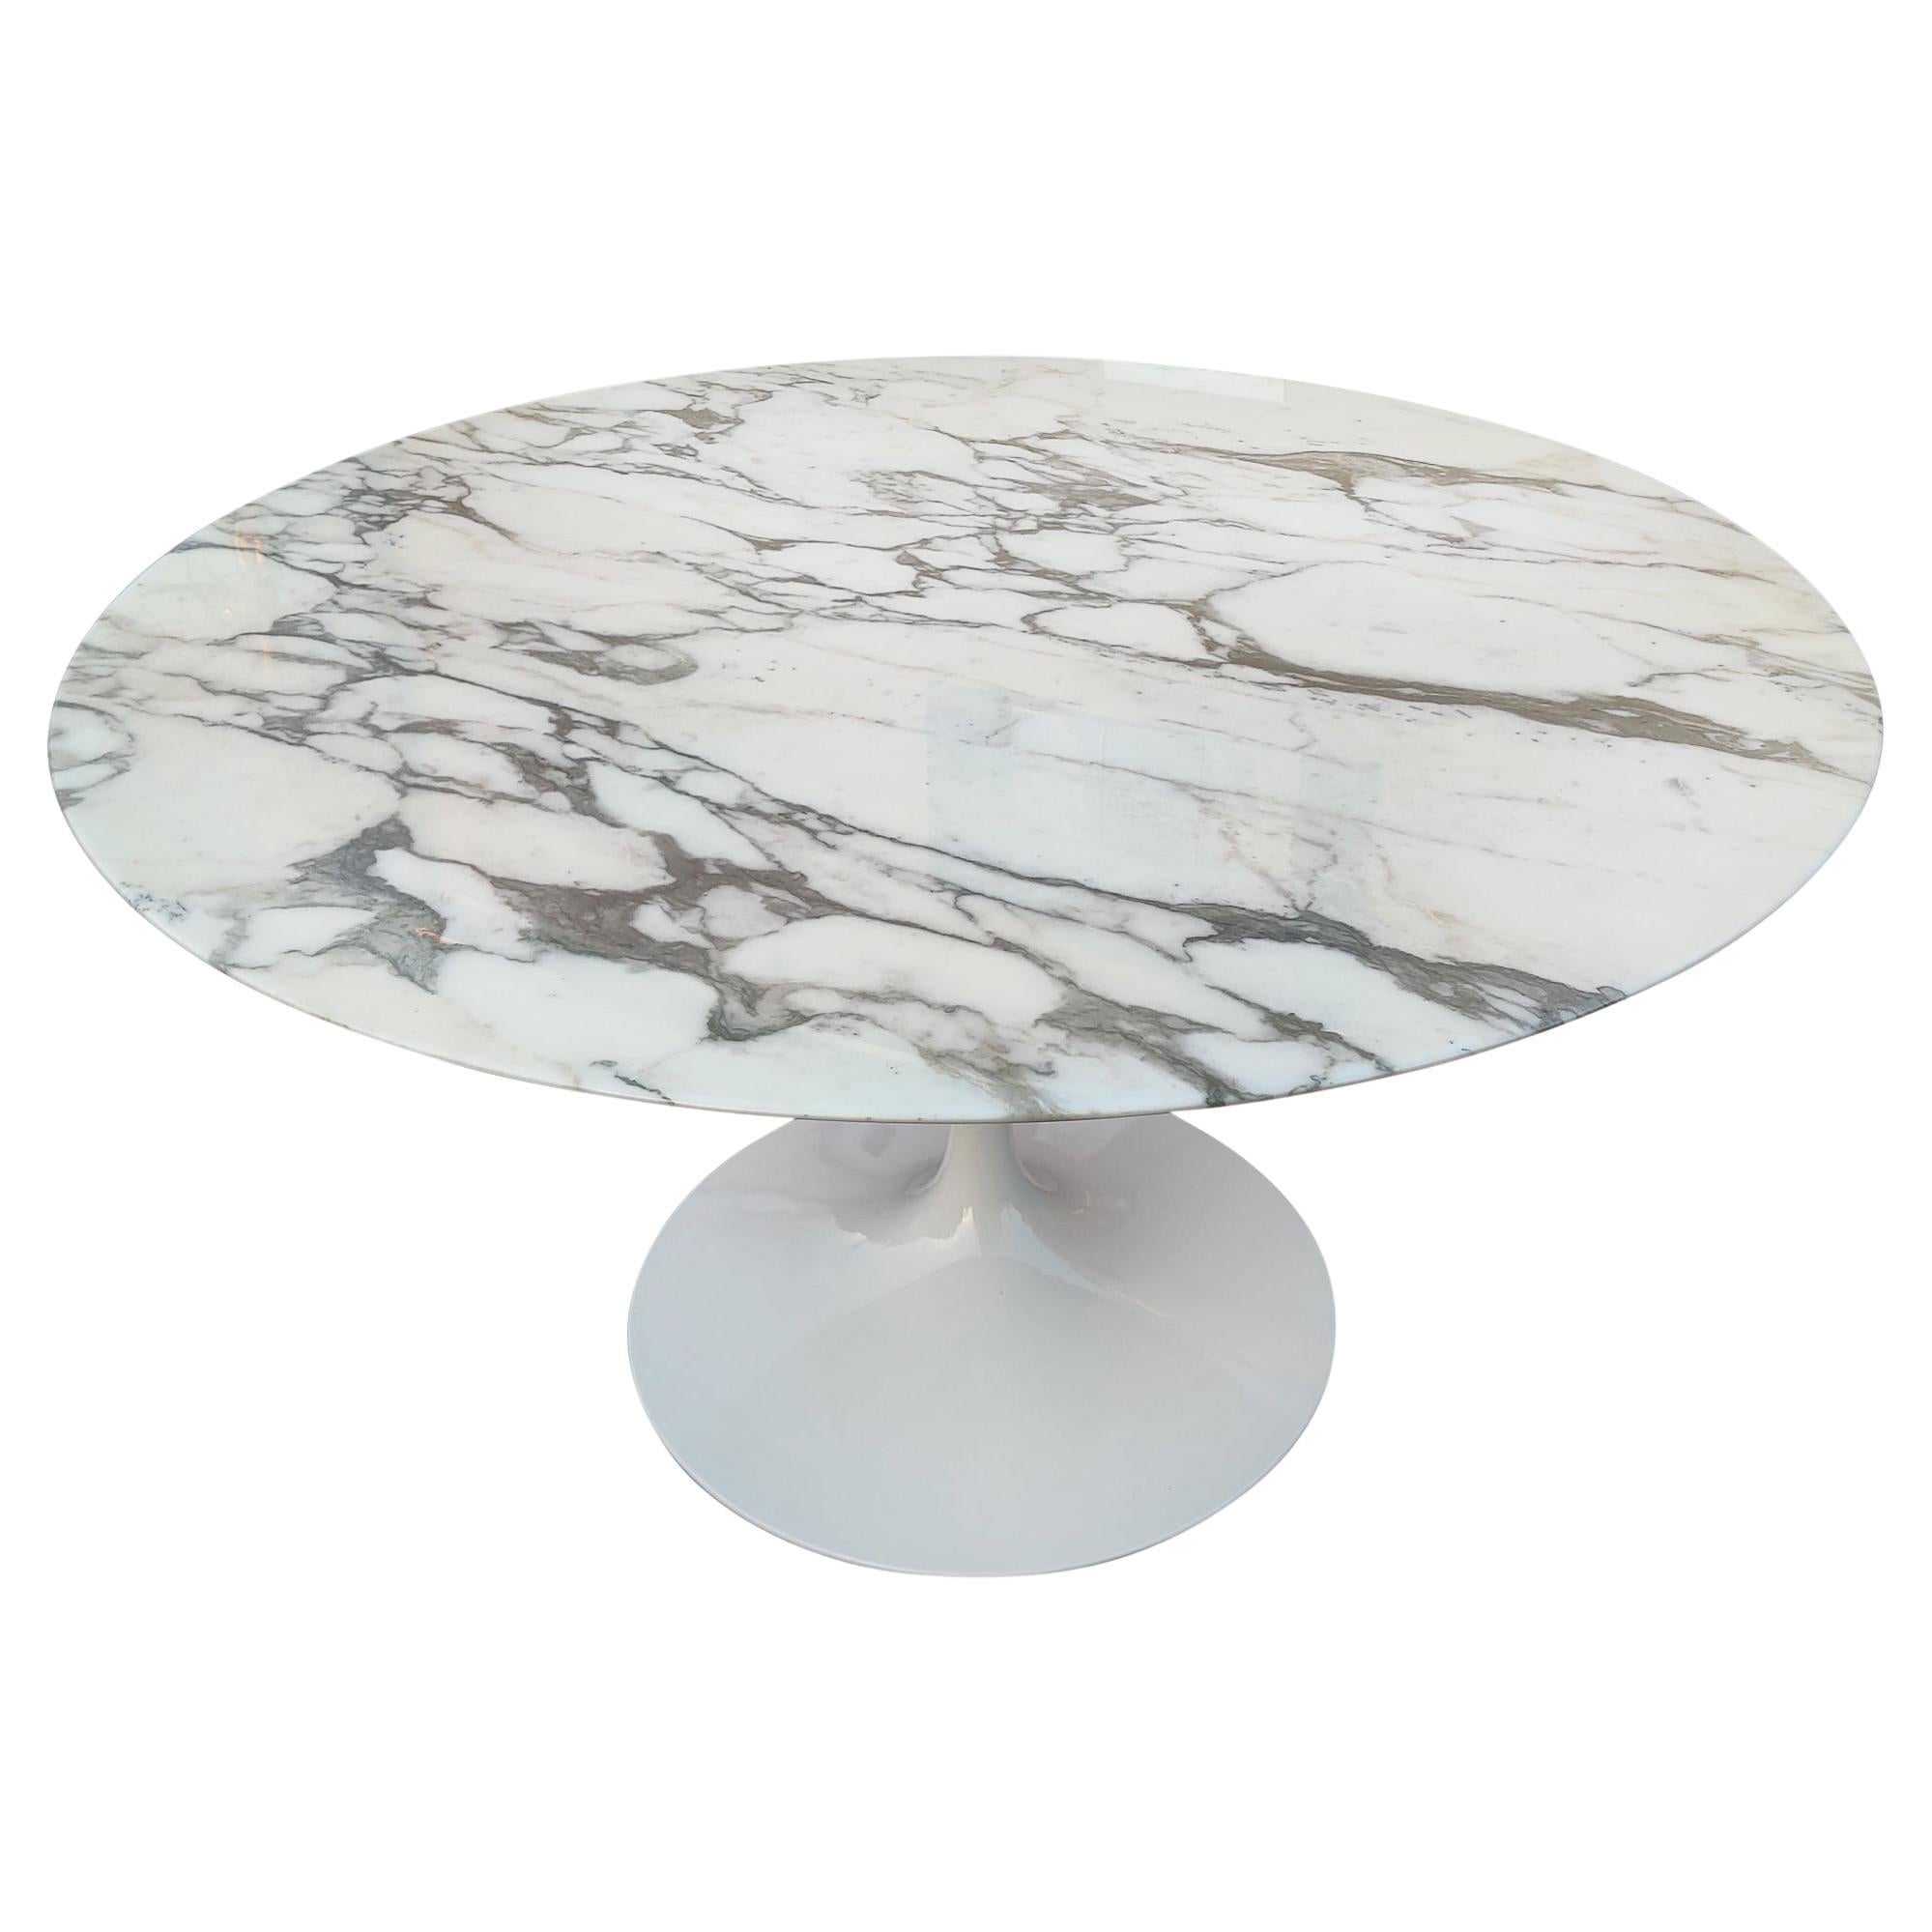 Eero Saarinen Knoll Tulip Round Dining Table 54" DIA Arabescato Marble Glossy  For Sale